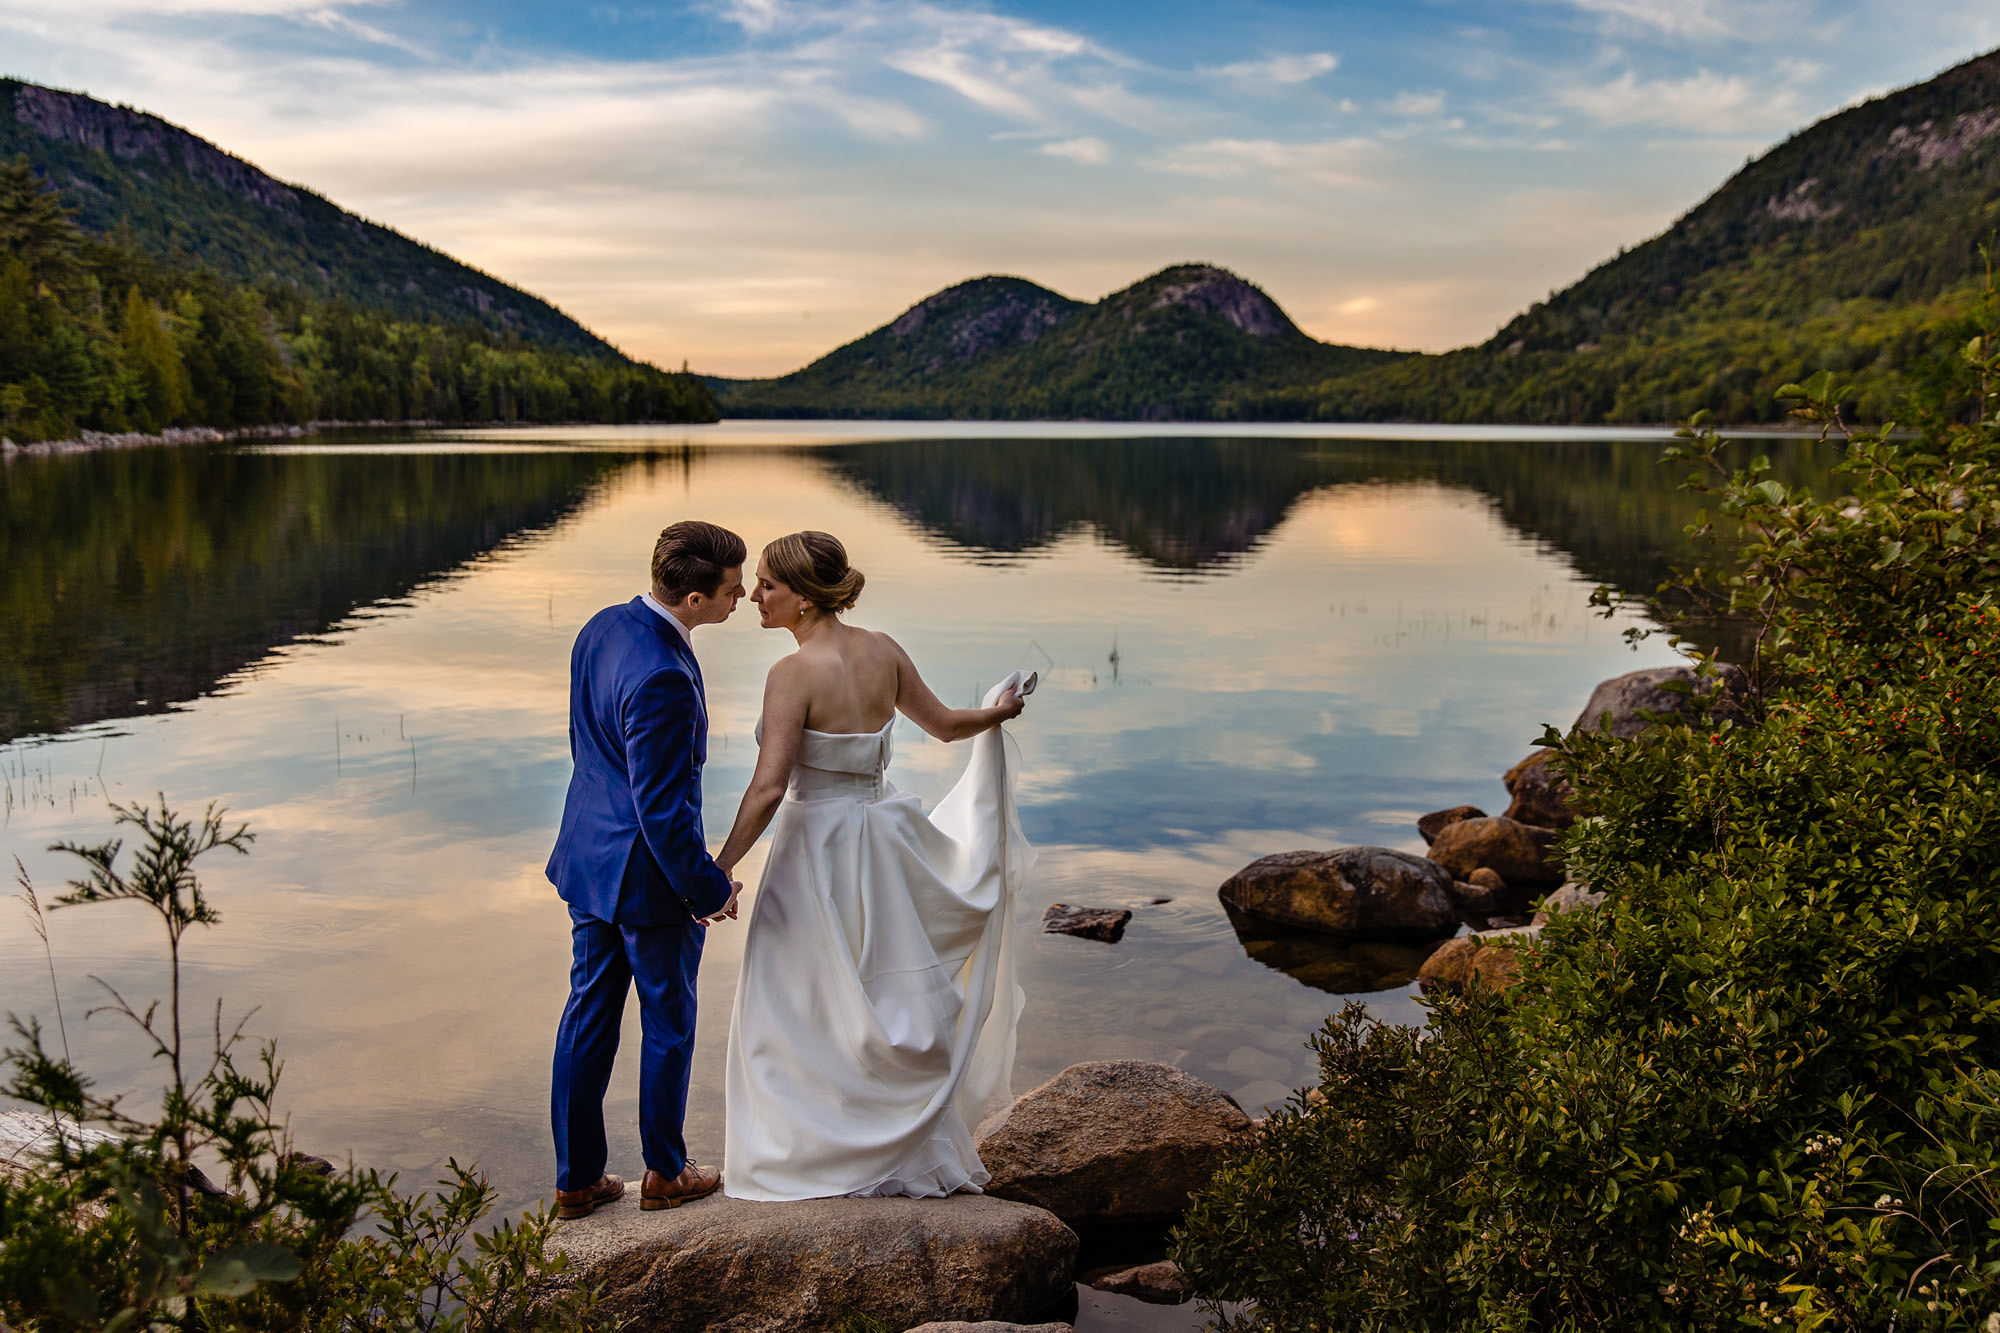 An elopement portrait taken at Jordan Pond in Acadia National Park